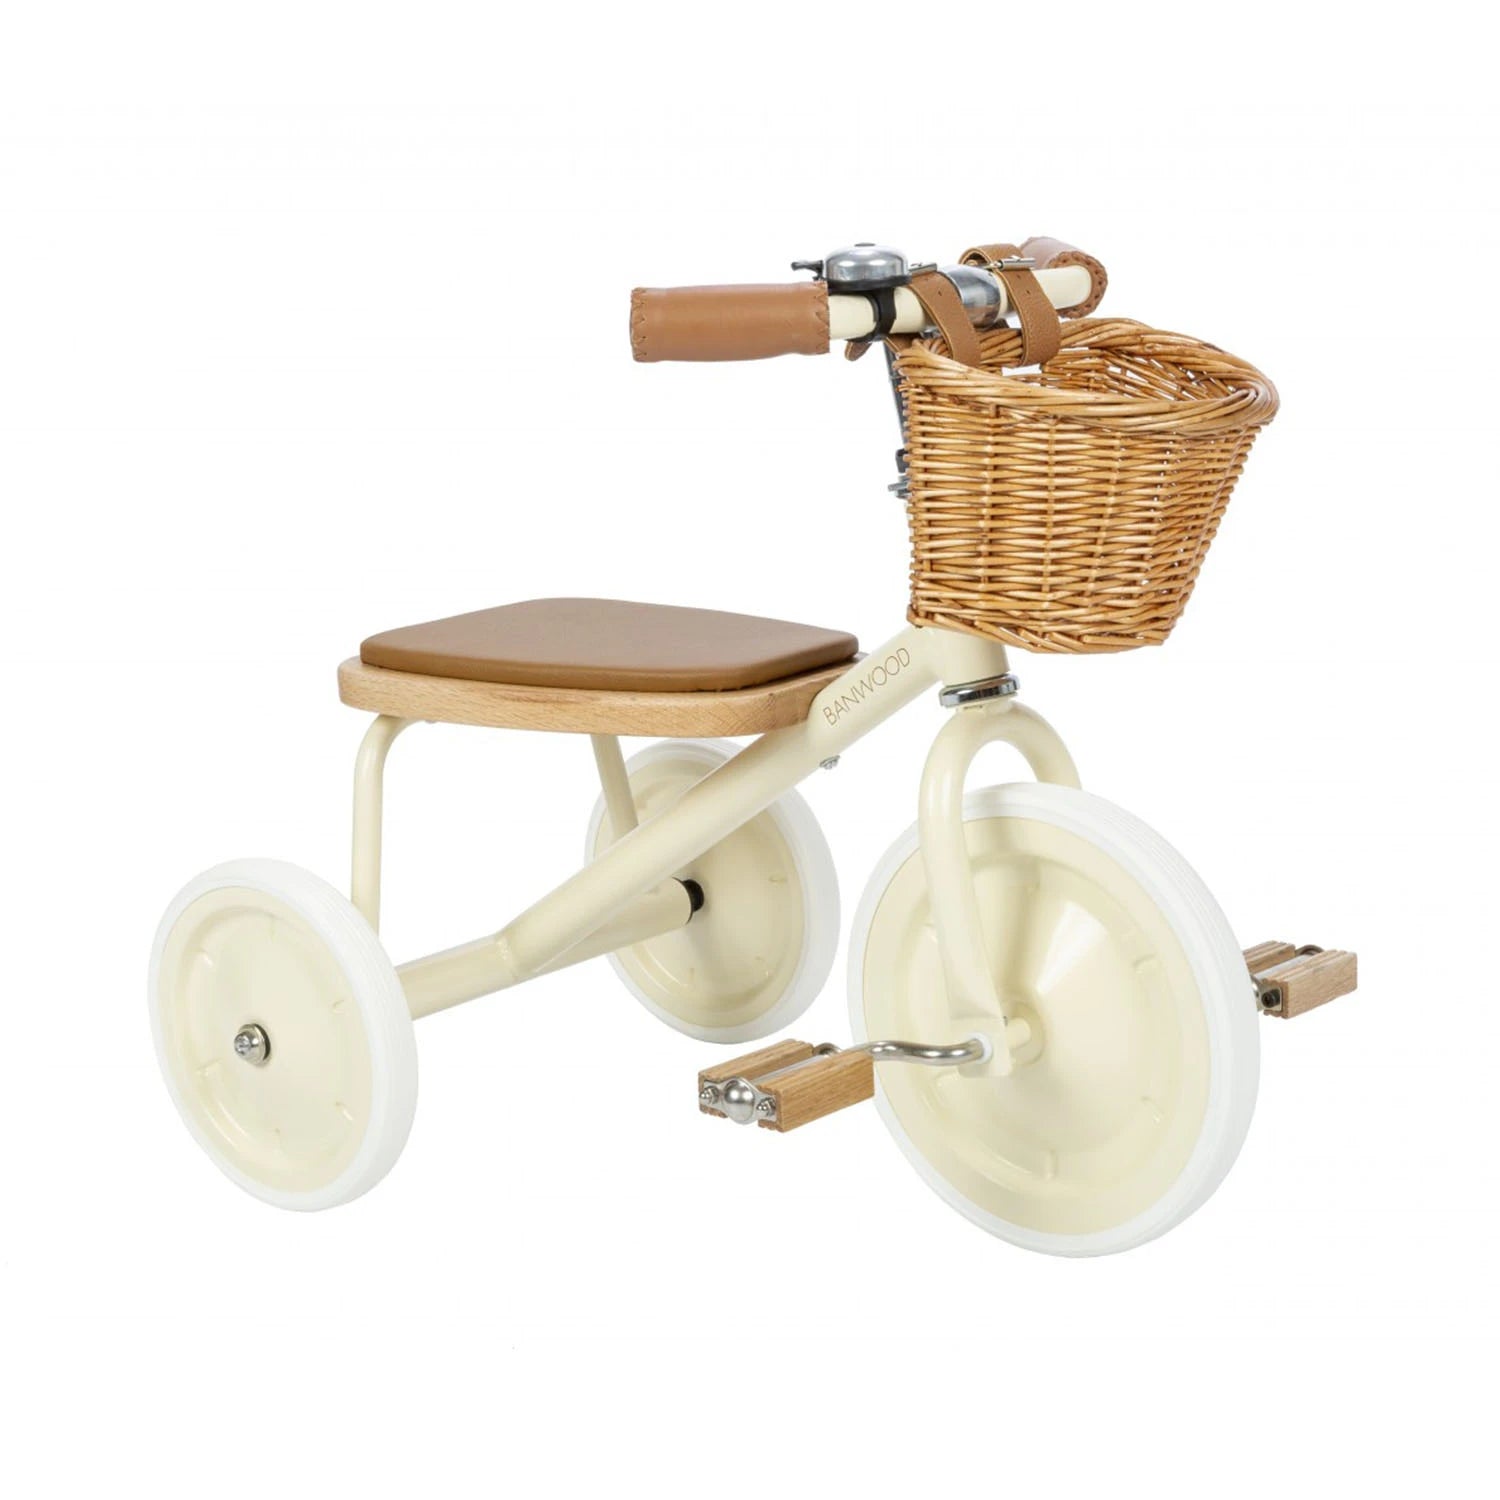 An image of Banwood Buy Banwood Trike Cream - Vintage Tricycle